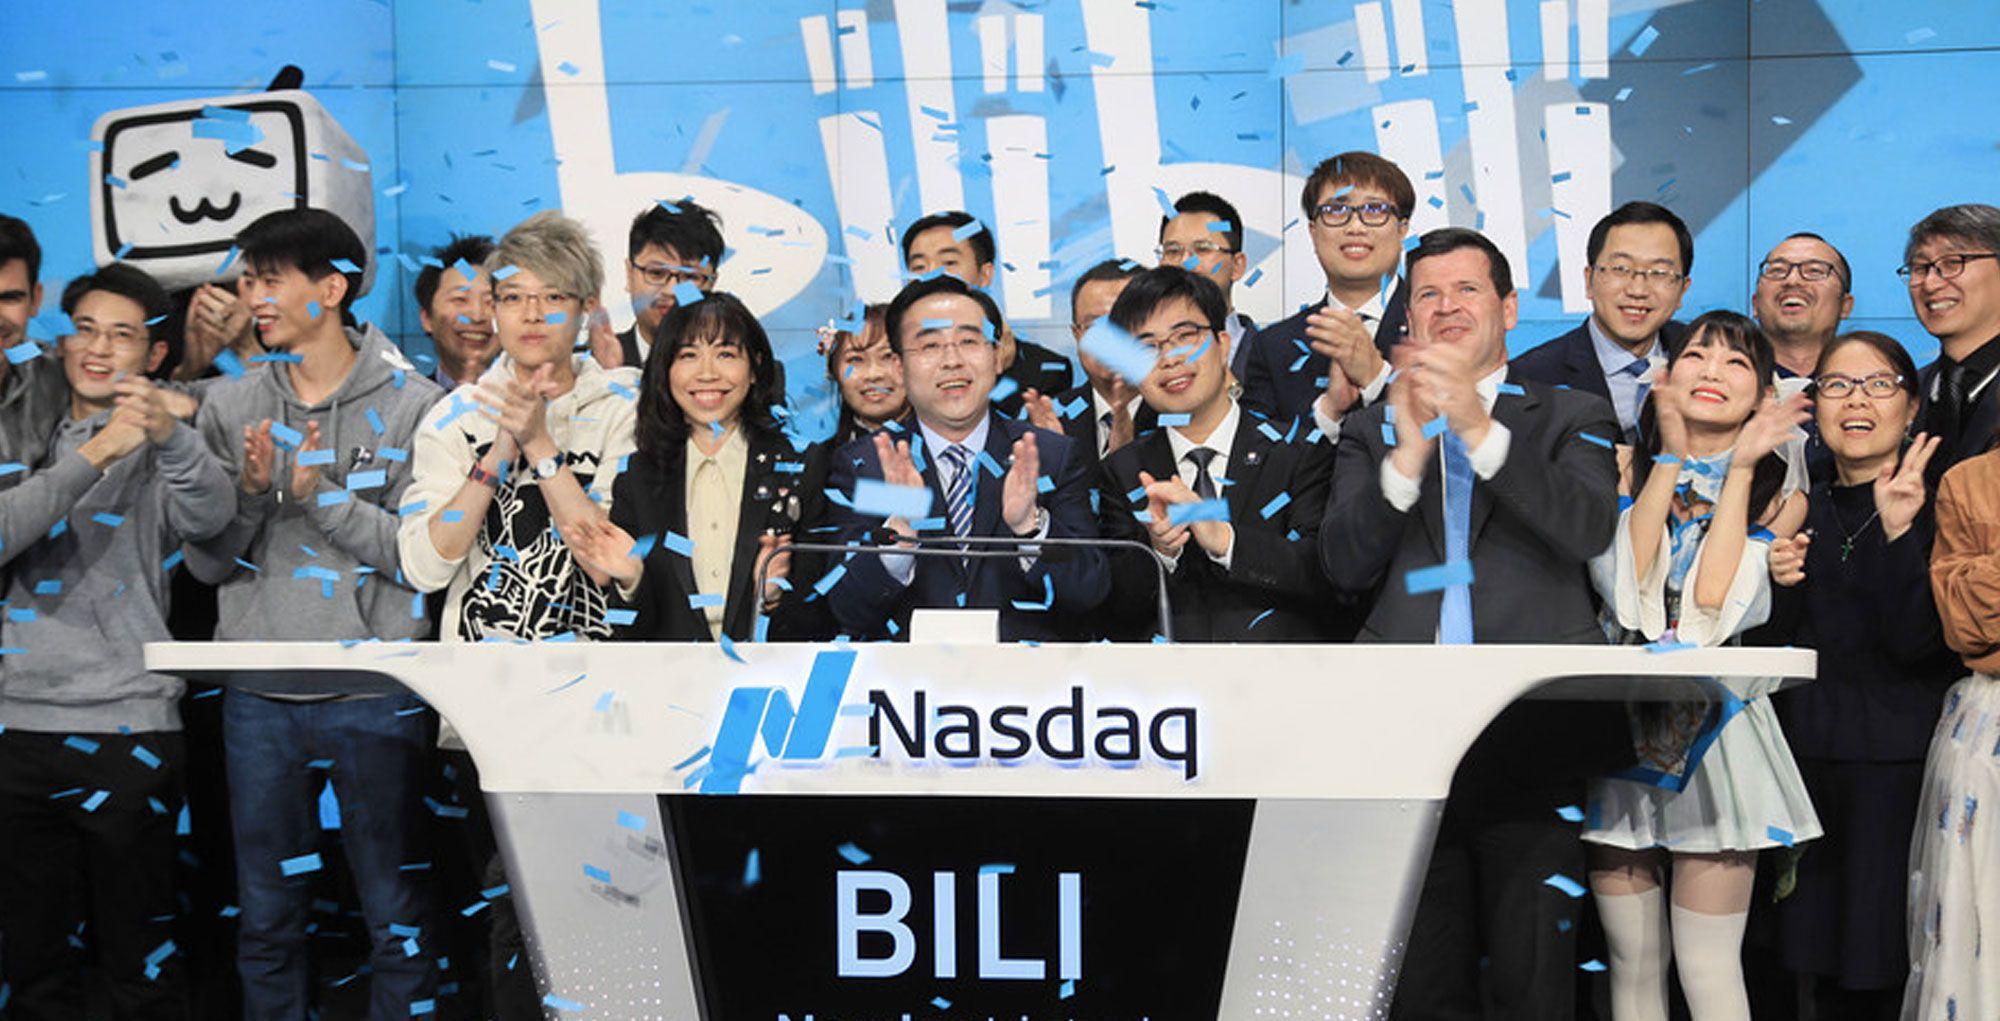 Bili Bili Logo - Alibaba Buys 8 Percent Stake in Popular Chinese Video Platform ...